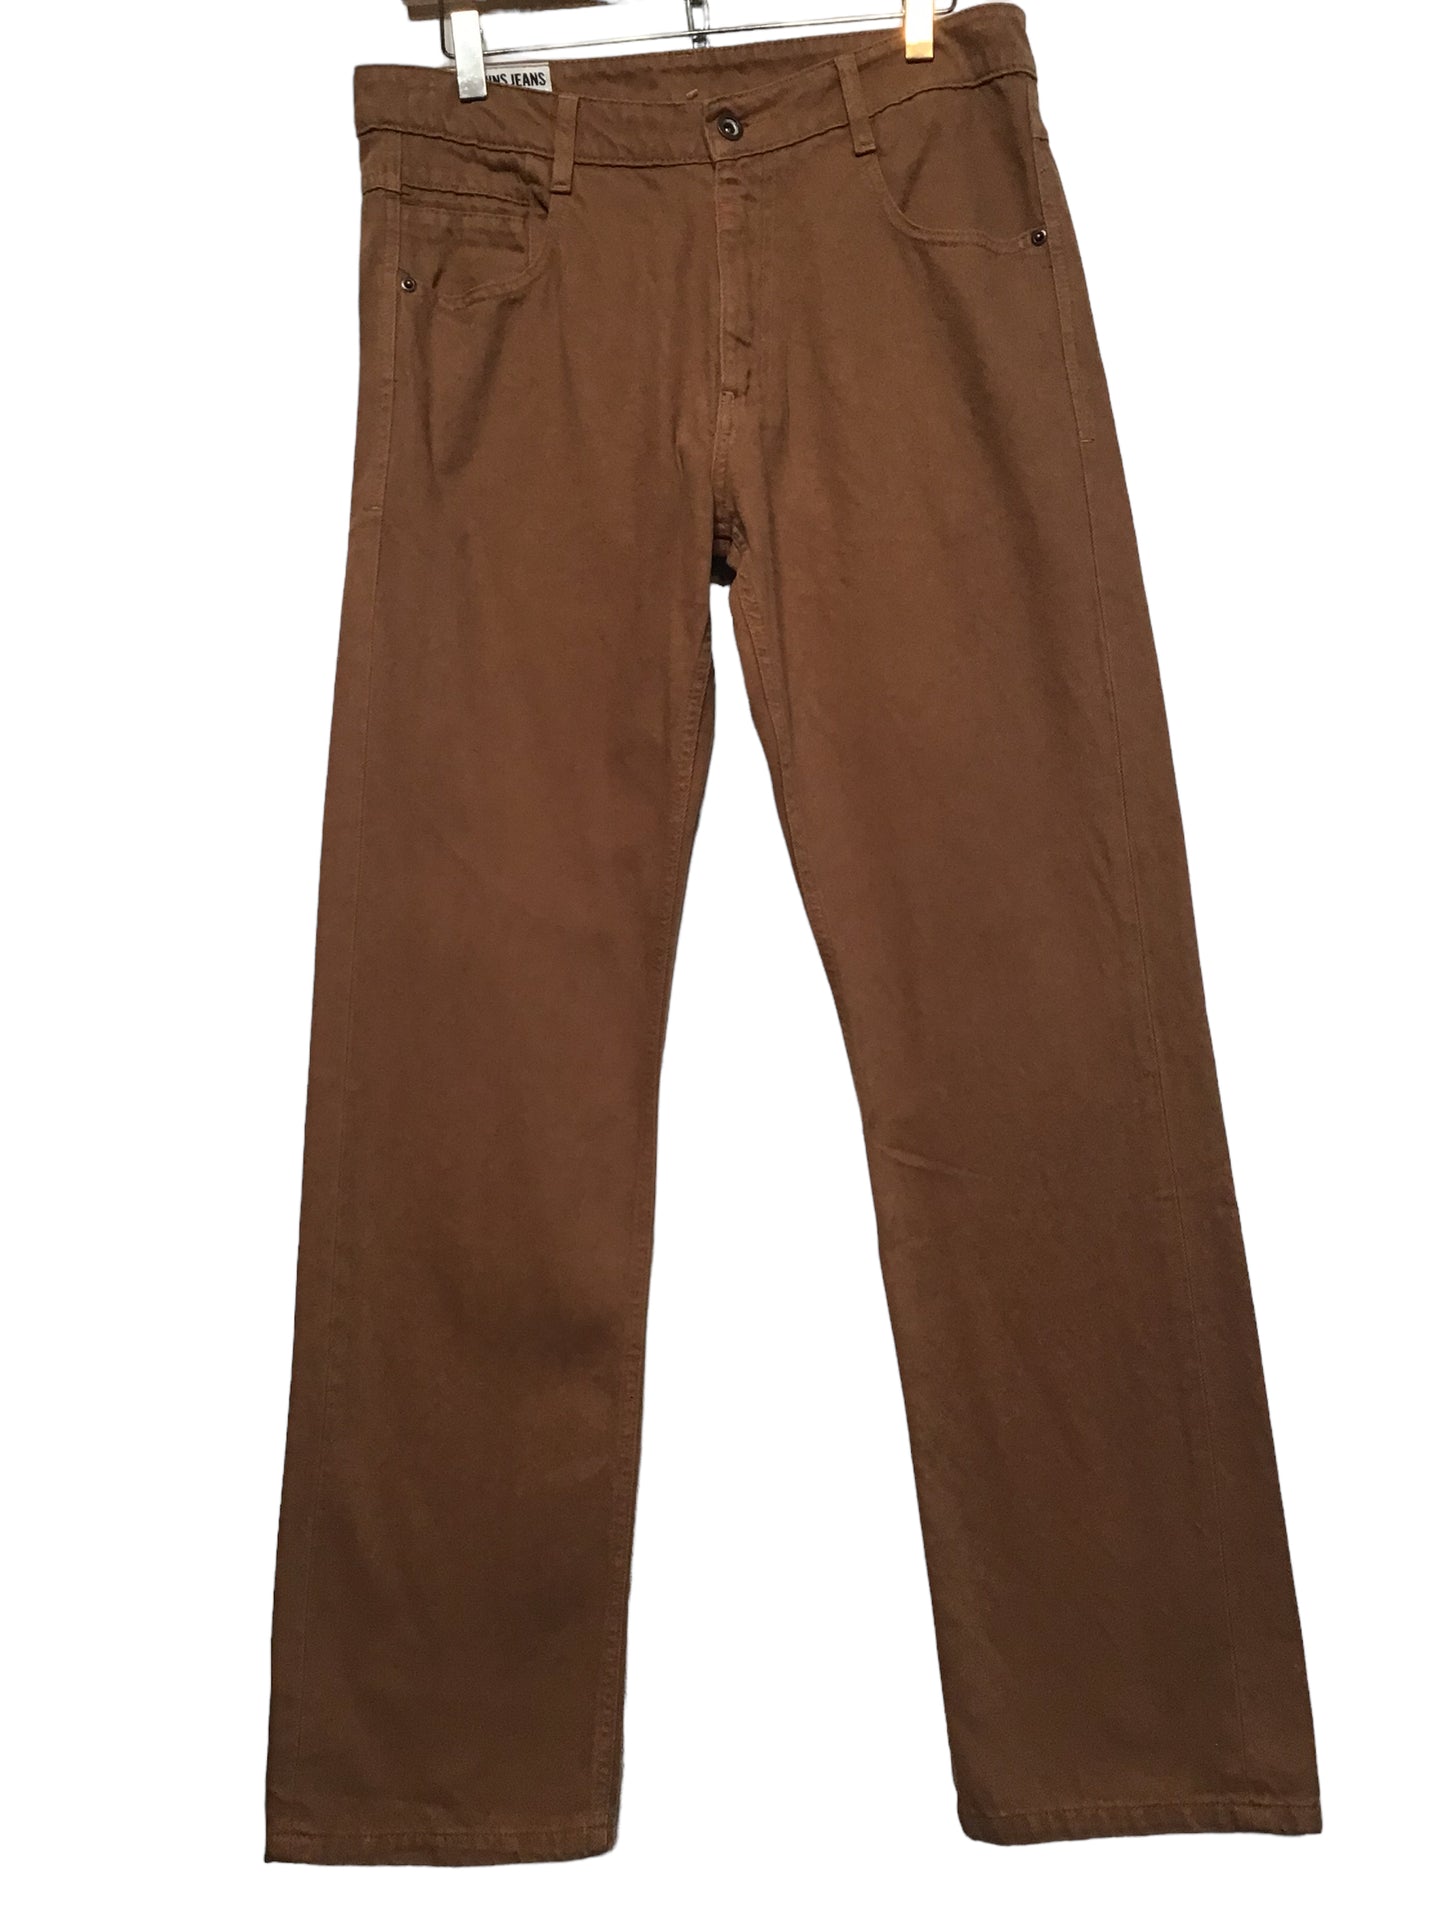 Joe Browns Jeans (32x32)